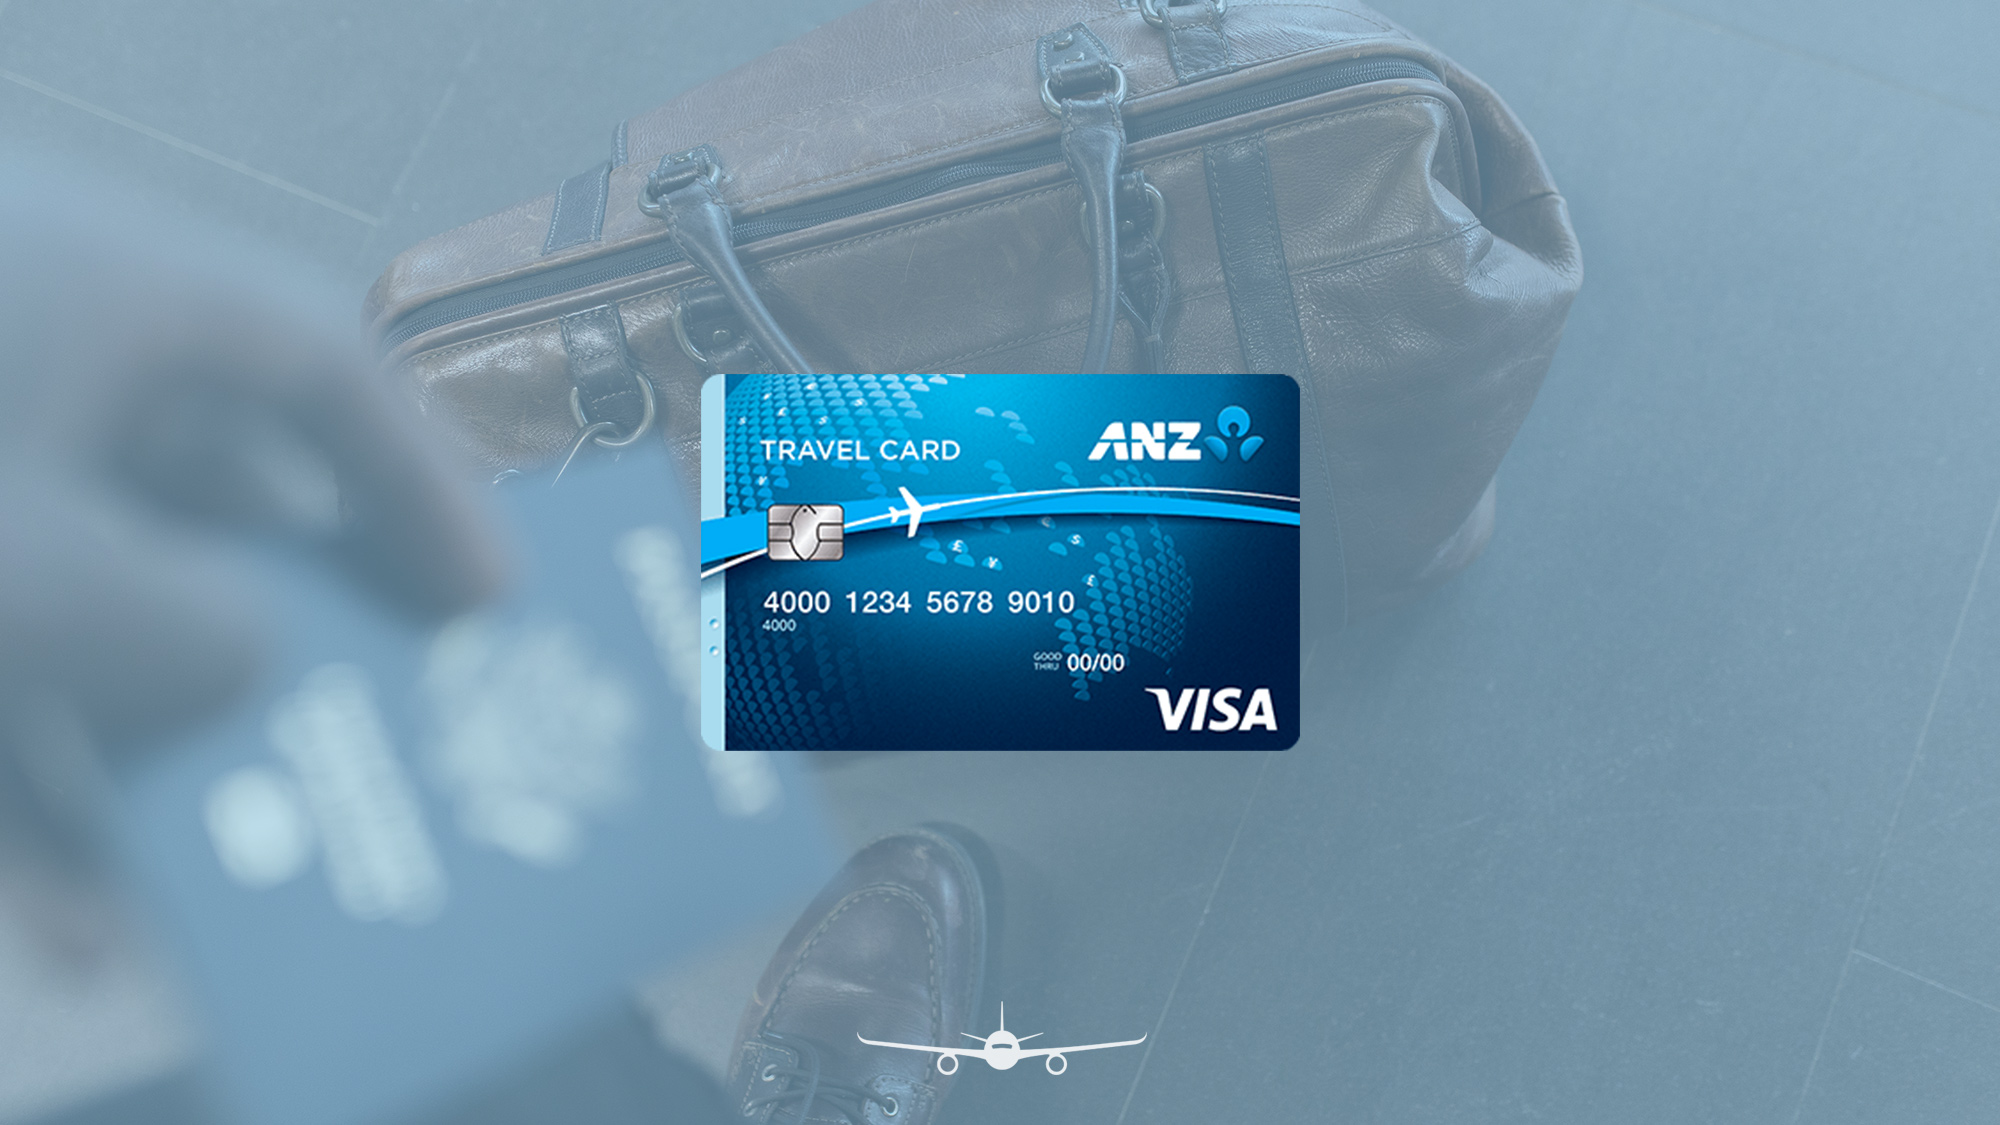 anz travel visa signature credit card